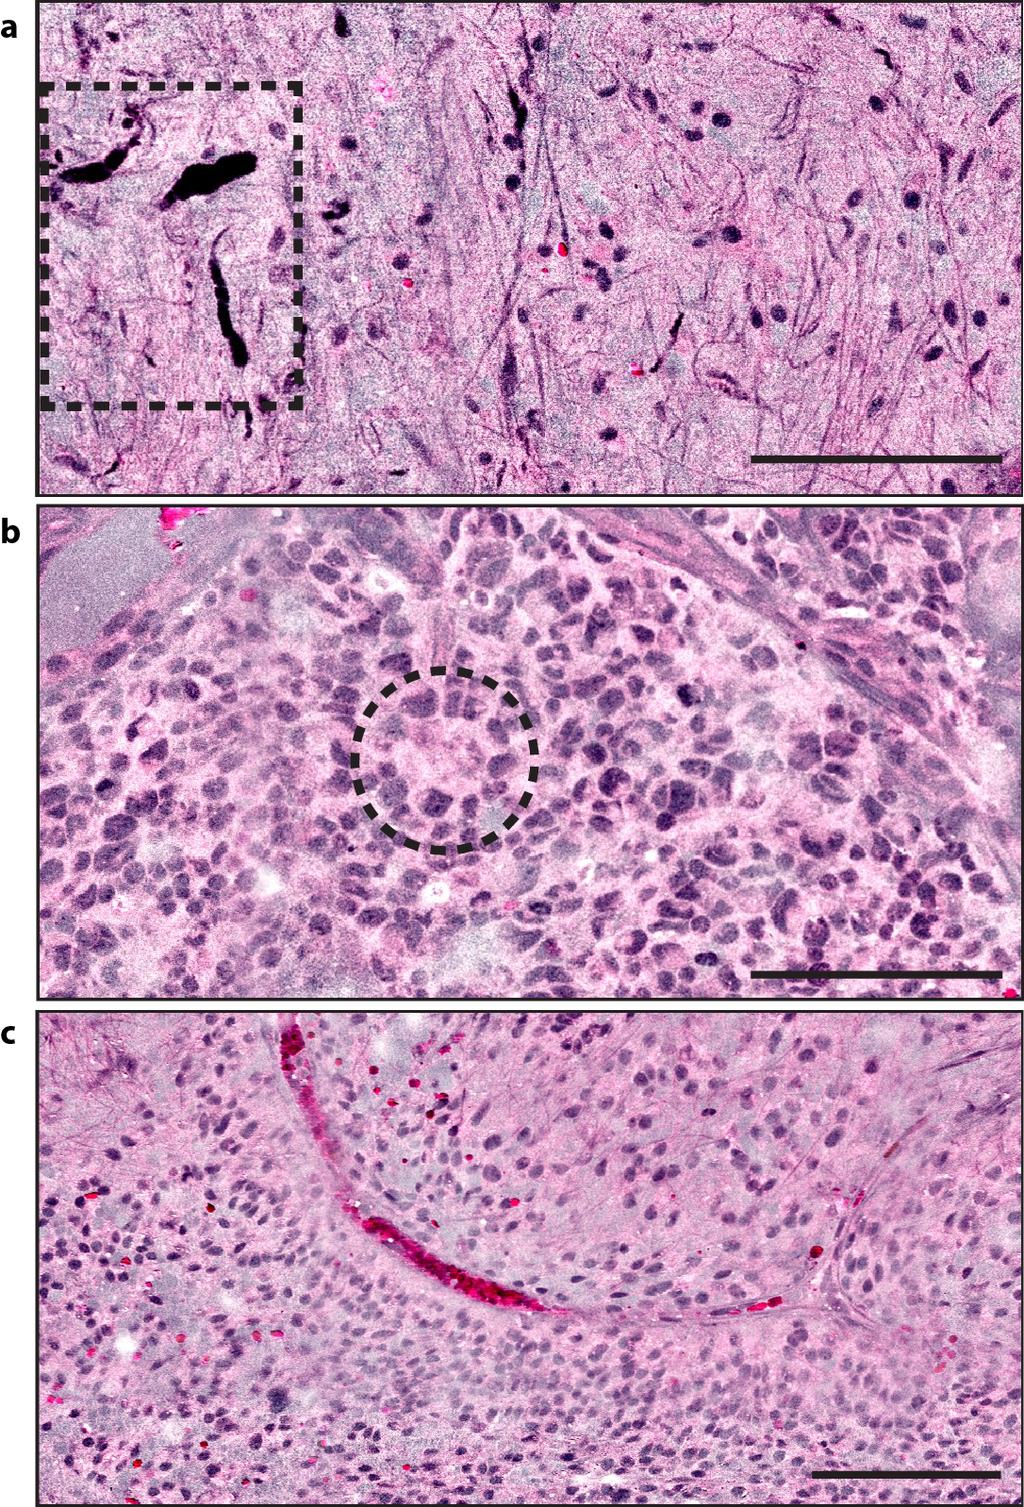 SUPPLEMENTARY INFORMATION Figure S2: SRH of pediatric posterior fossa tumors.